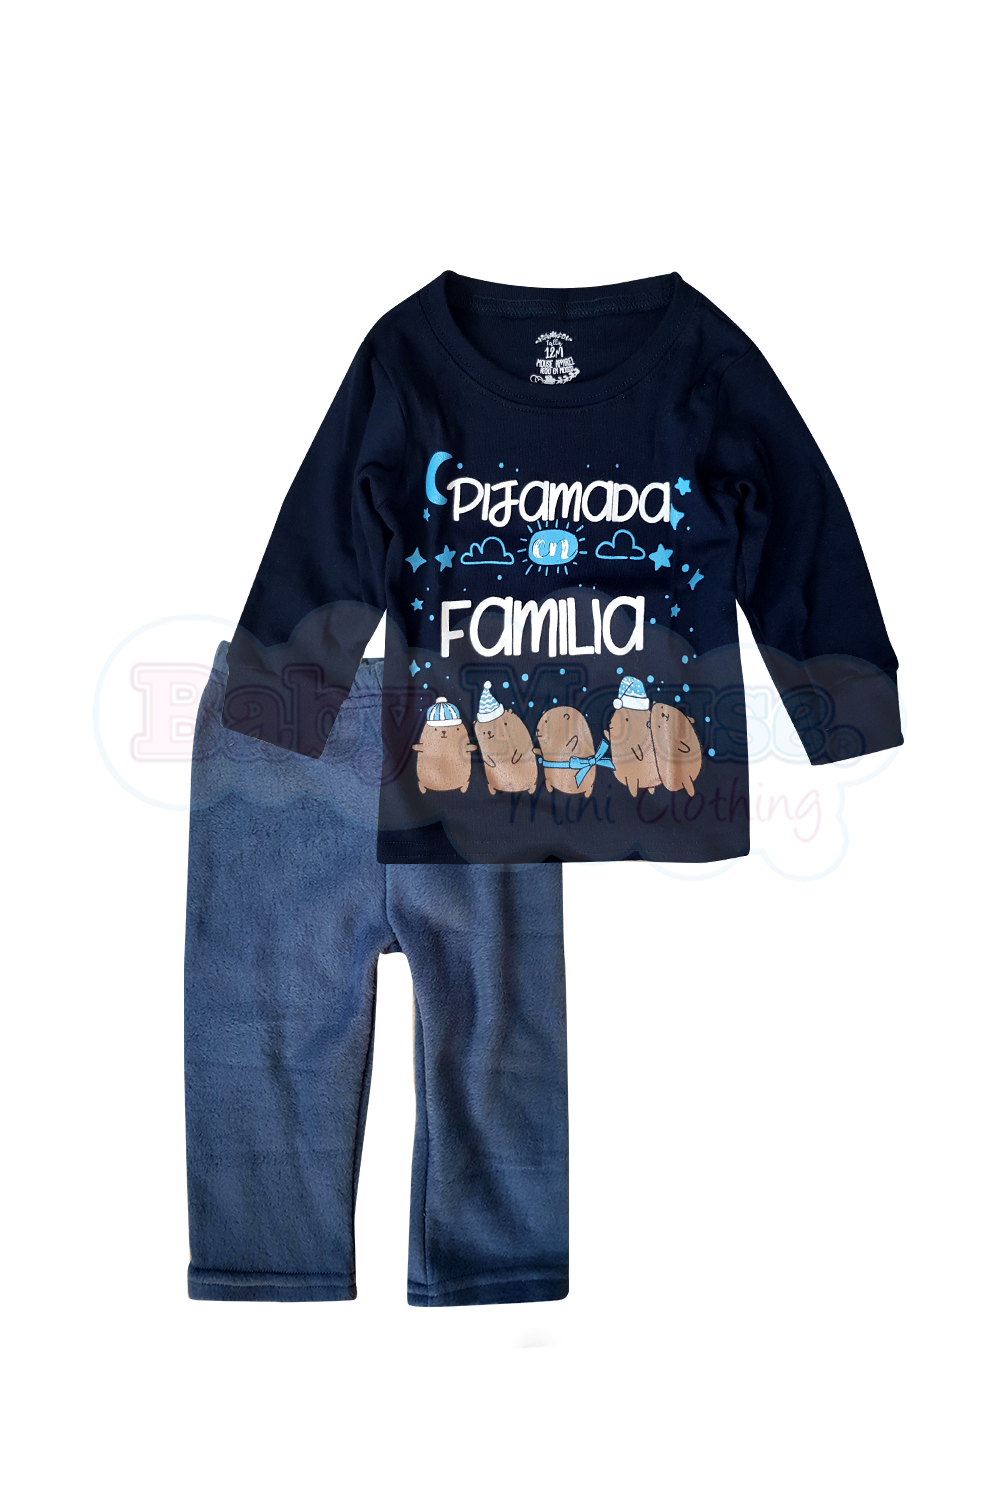 Pijama polar 1 a 10 Años. Pijamada en familia